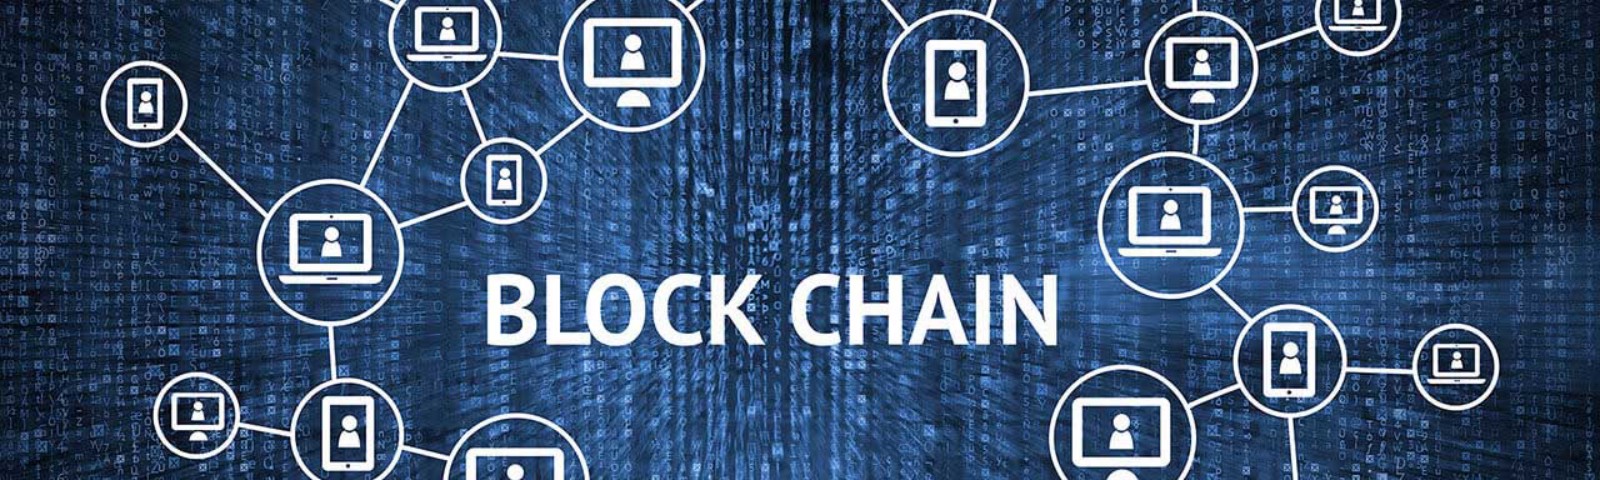 blockchain-marketing-ncryptbit.jpeg